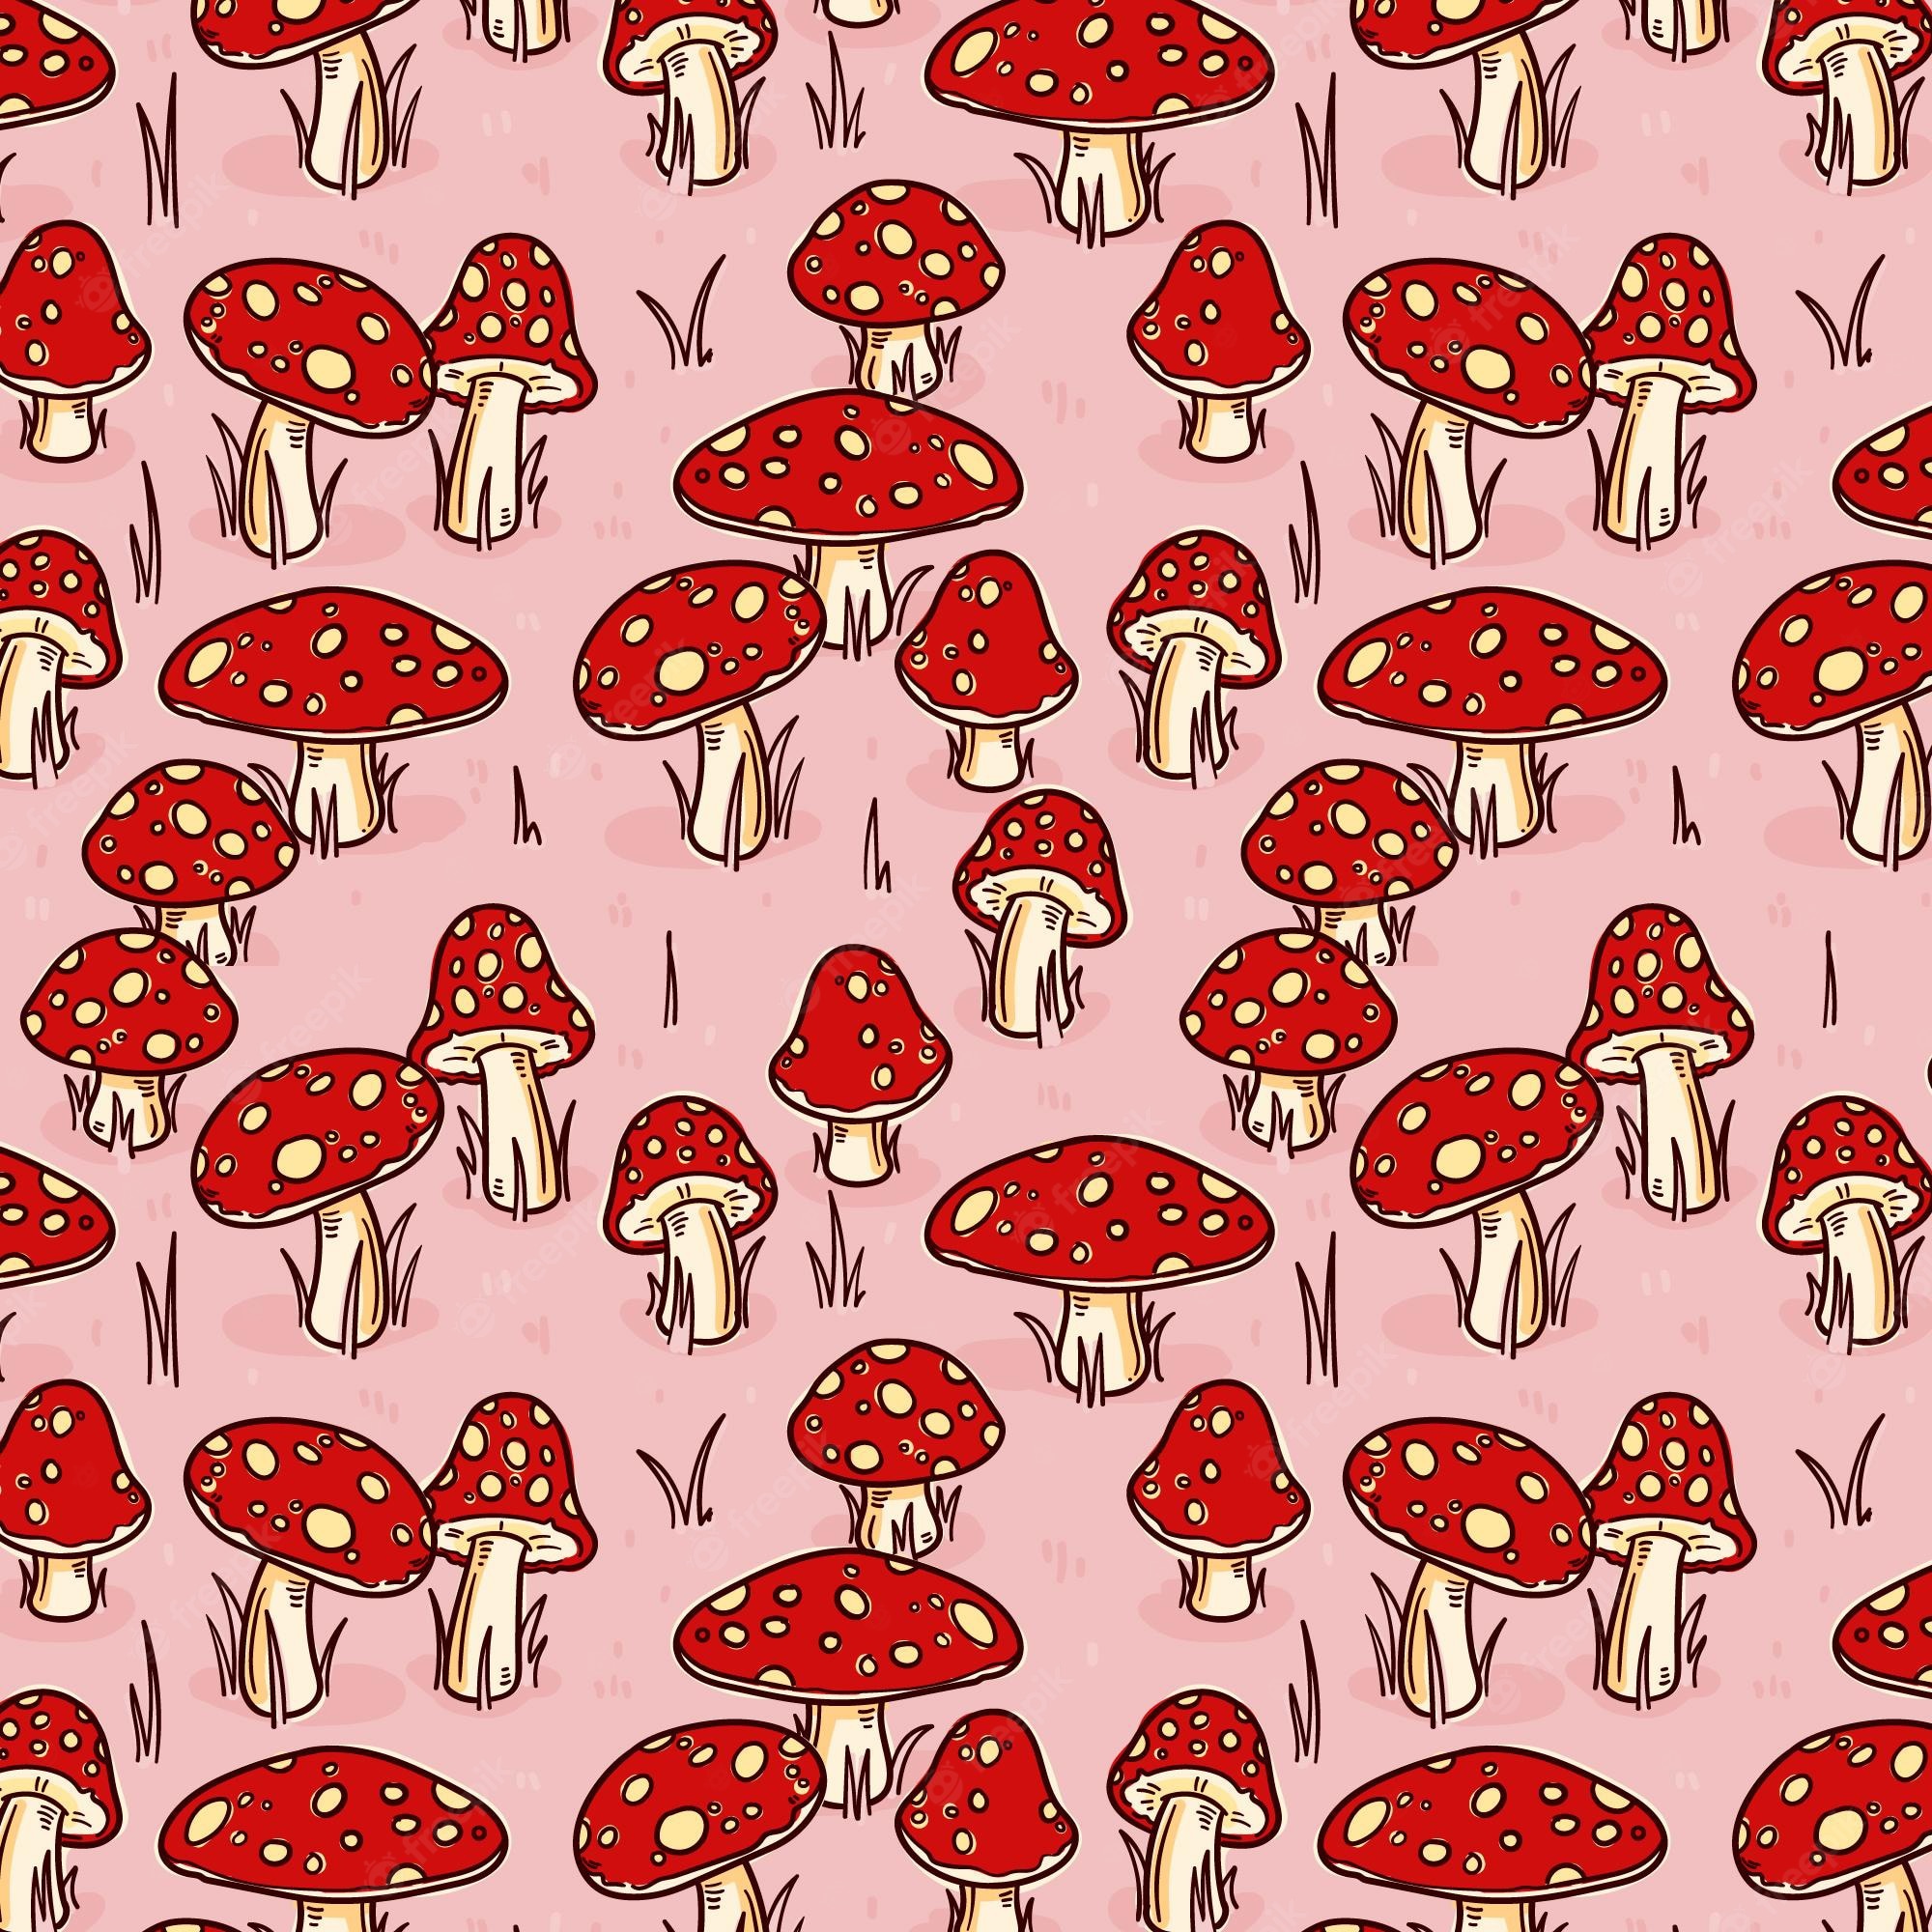 Mushroom wallpaper Vectors & Illustrations for Free Download